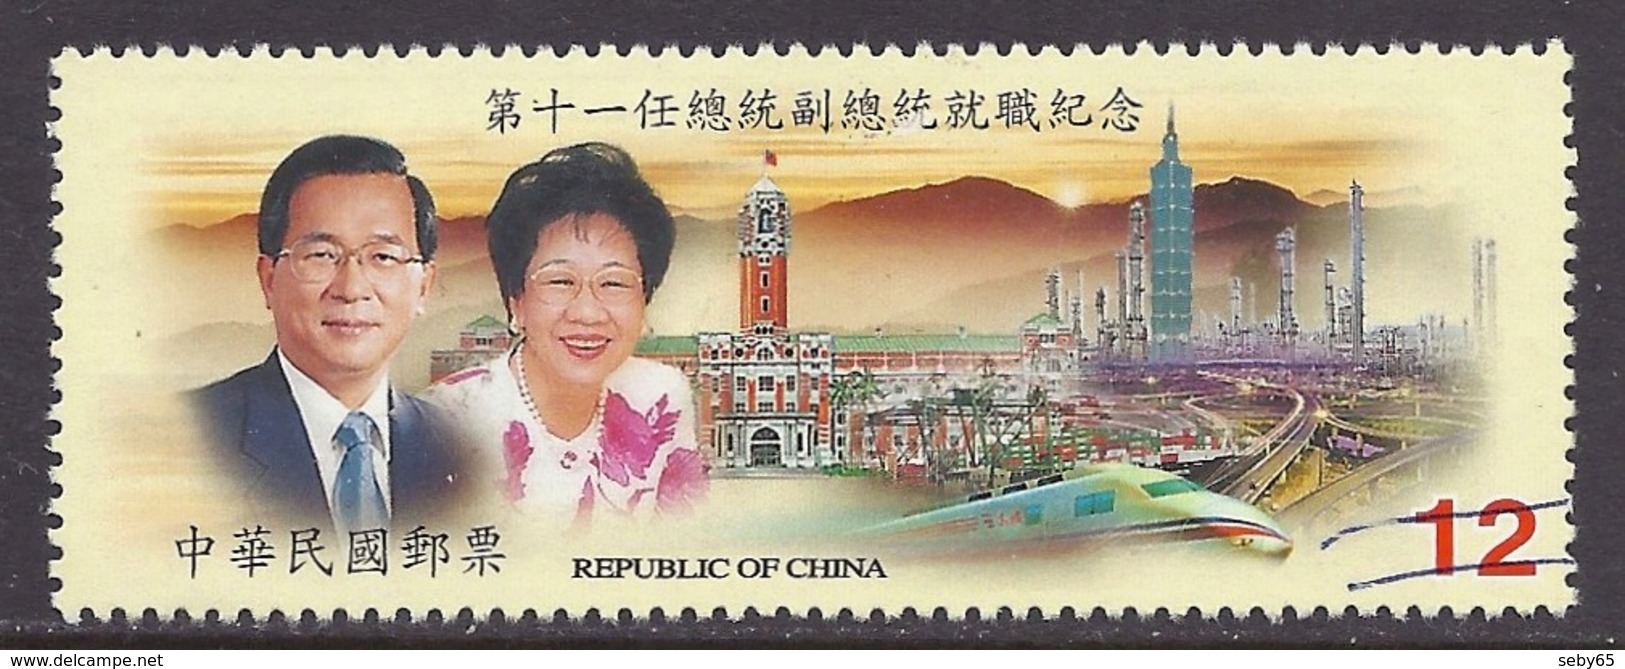 Taiwan - 2004 President, Chen Shui-bian And Vice Hsui-lien Annette Lu - Used - Gebruikt